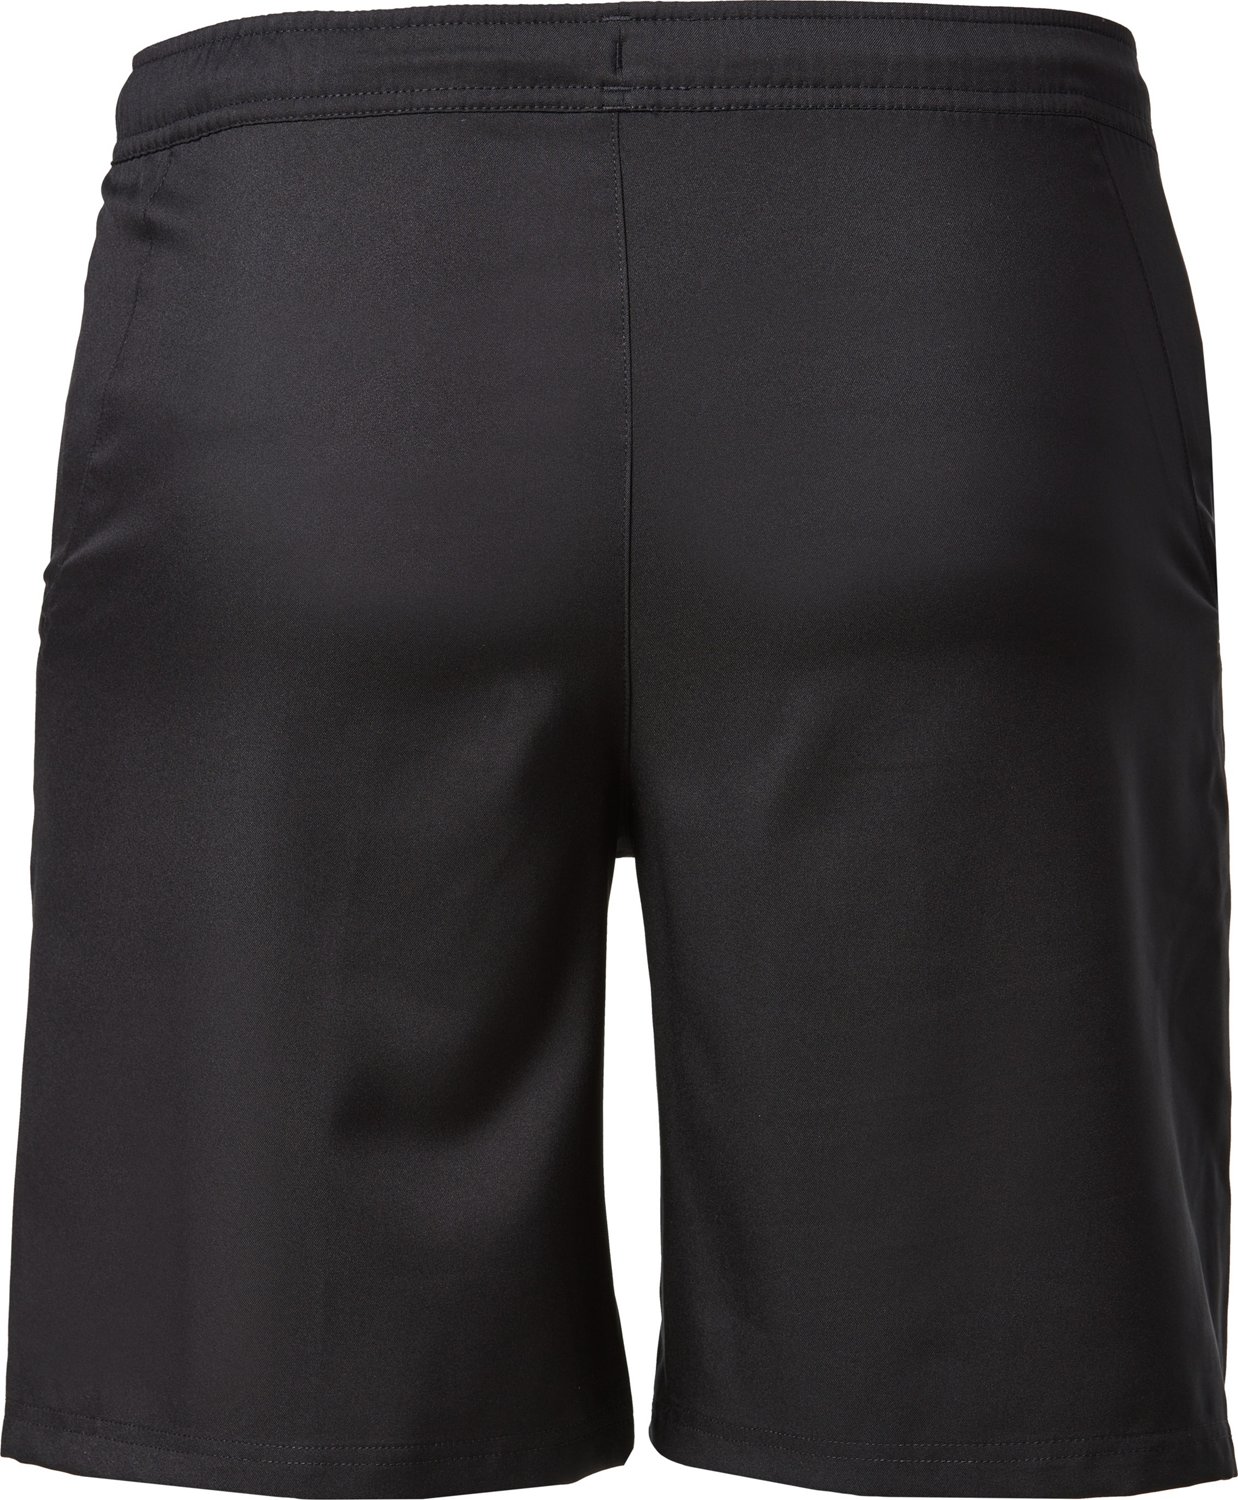 The Academy Brand, Bottoms, Bcg Academycom Boys Training Hybrid Woven  Pants Black Xl 82 Wpockets